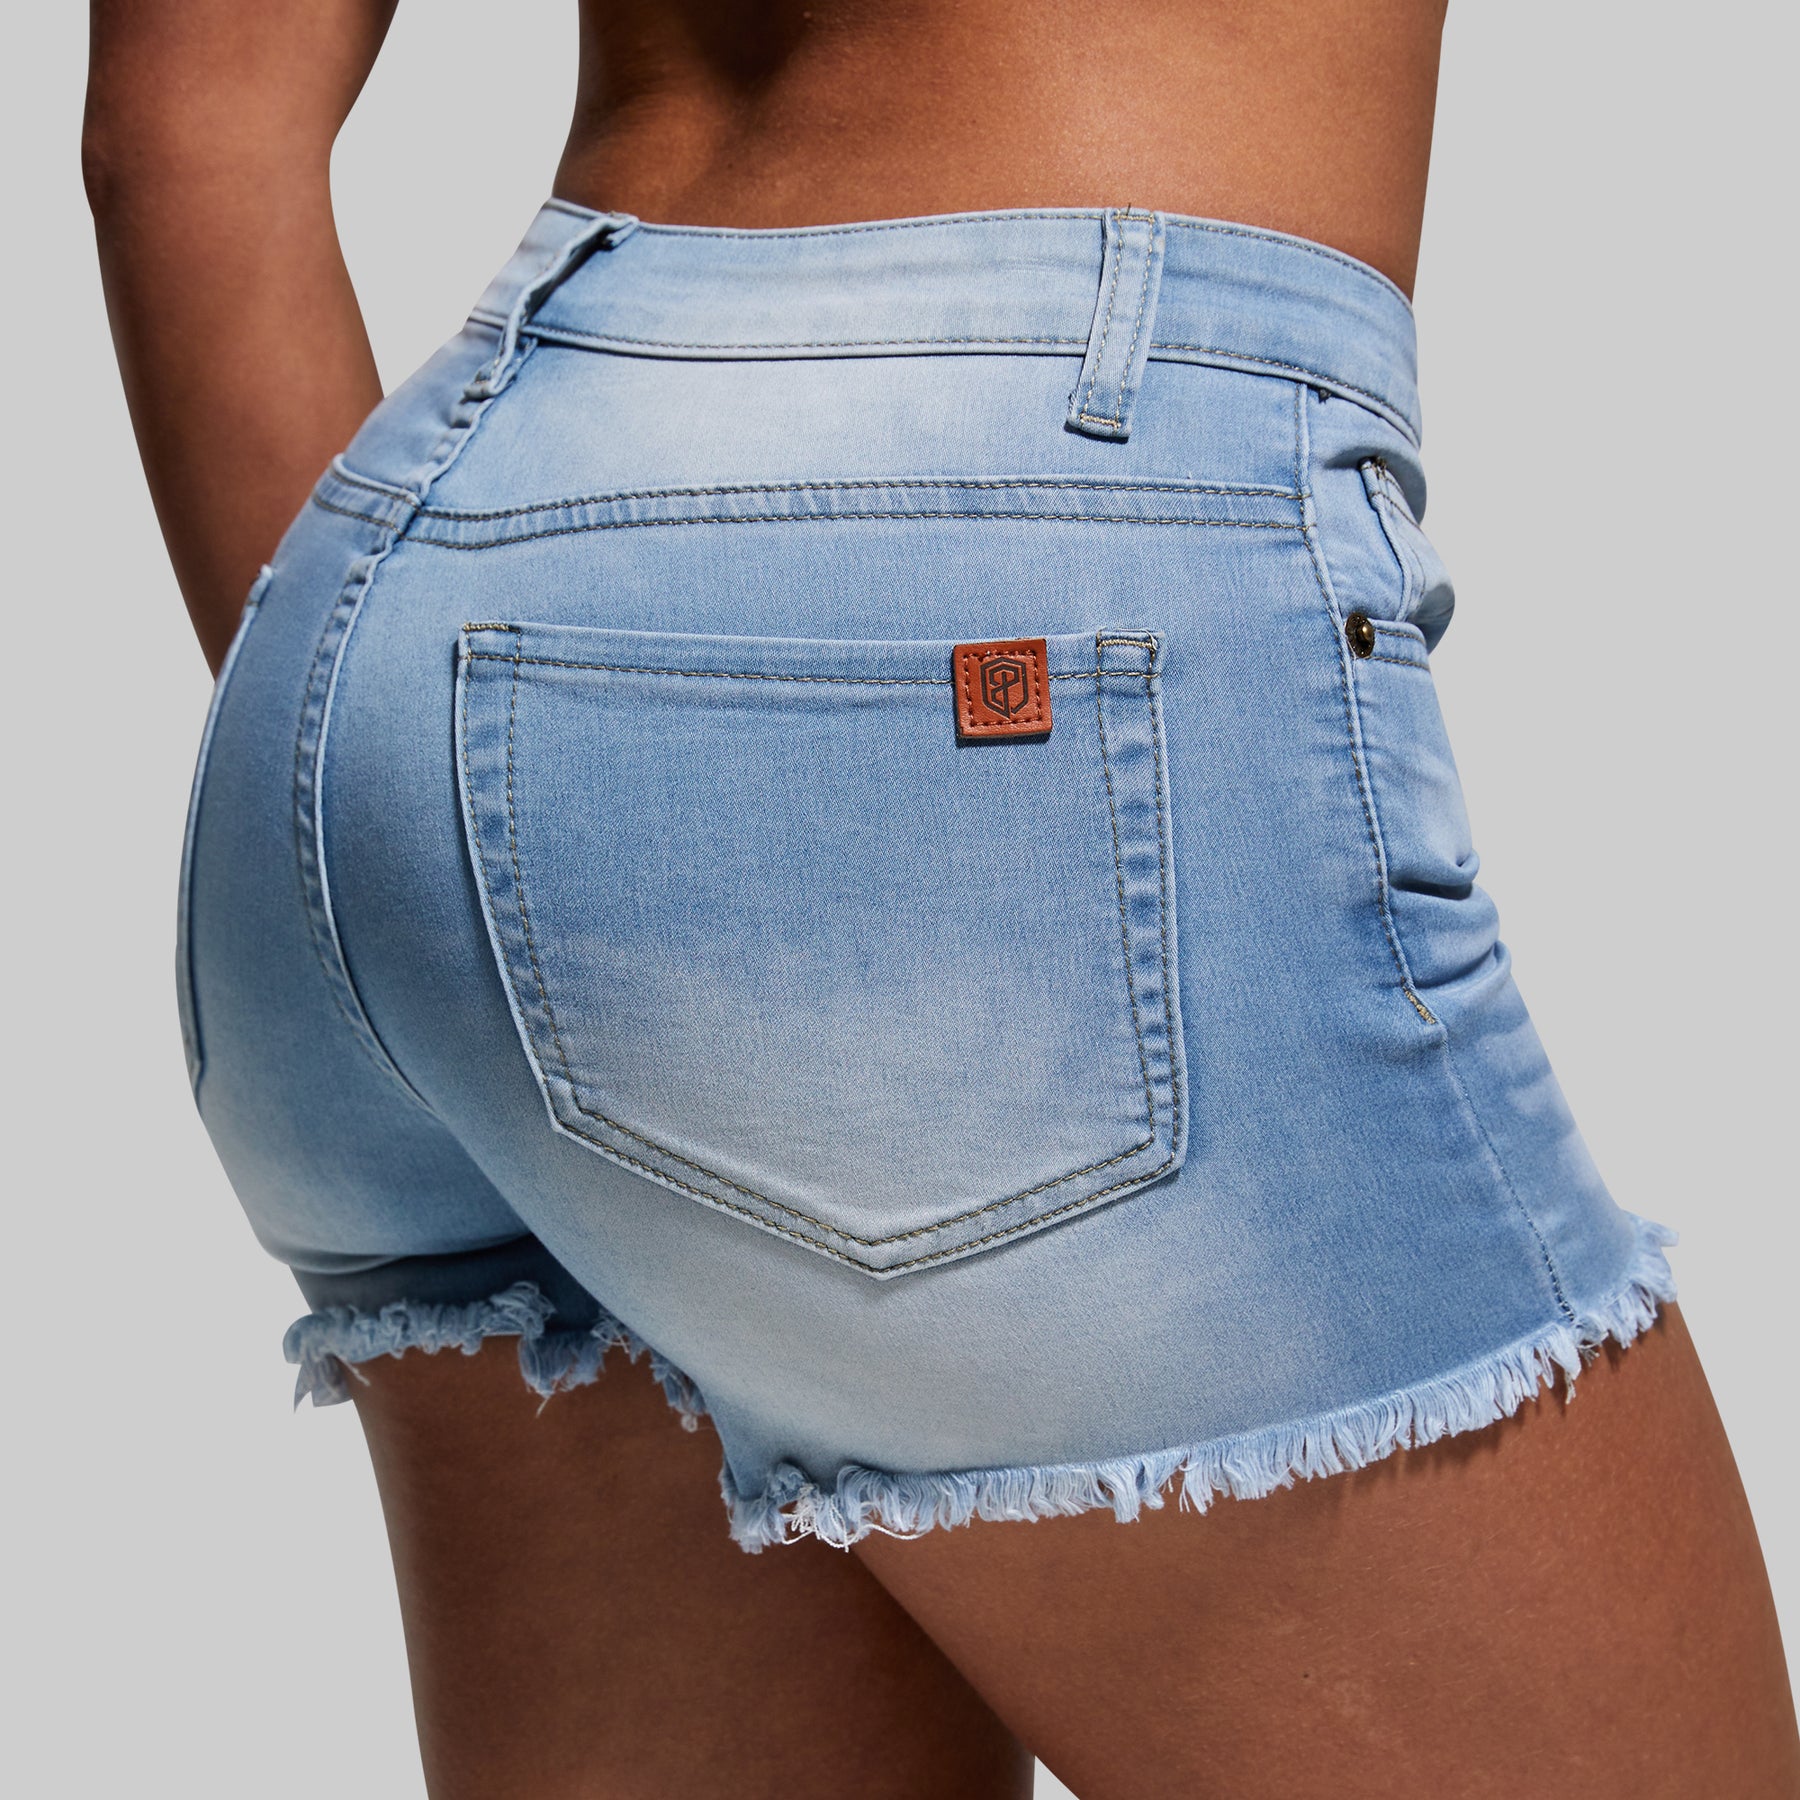 Buy PHOENISING Women's Fashion Jean Shorts Curvy Denim Fabric Short Pants,  Size 2-16, Light Blue, 4 at Amazon.in